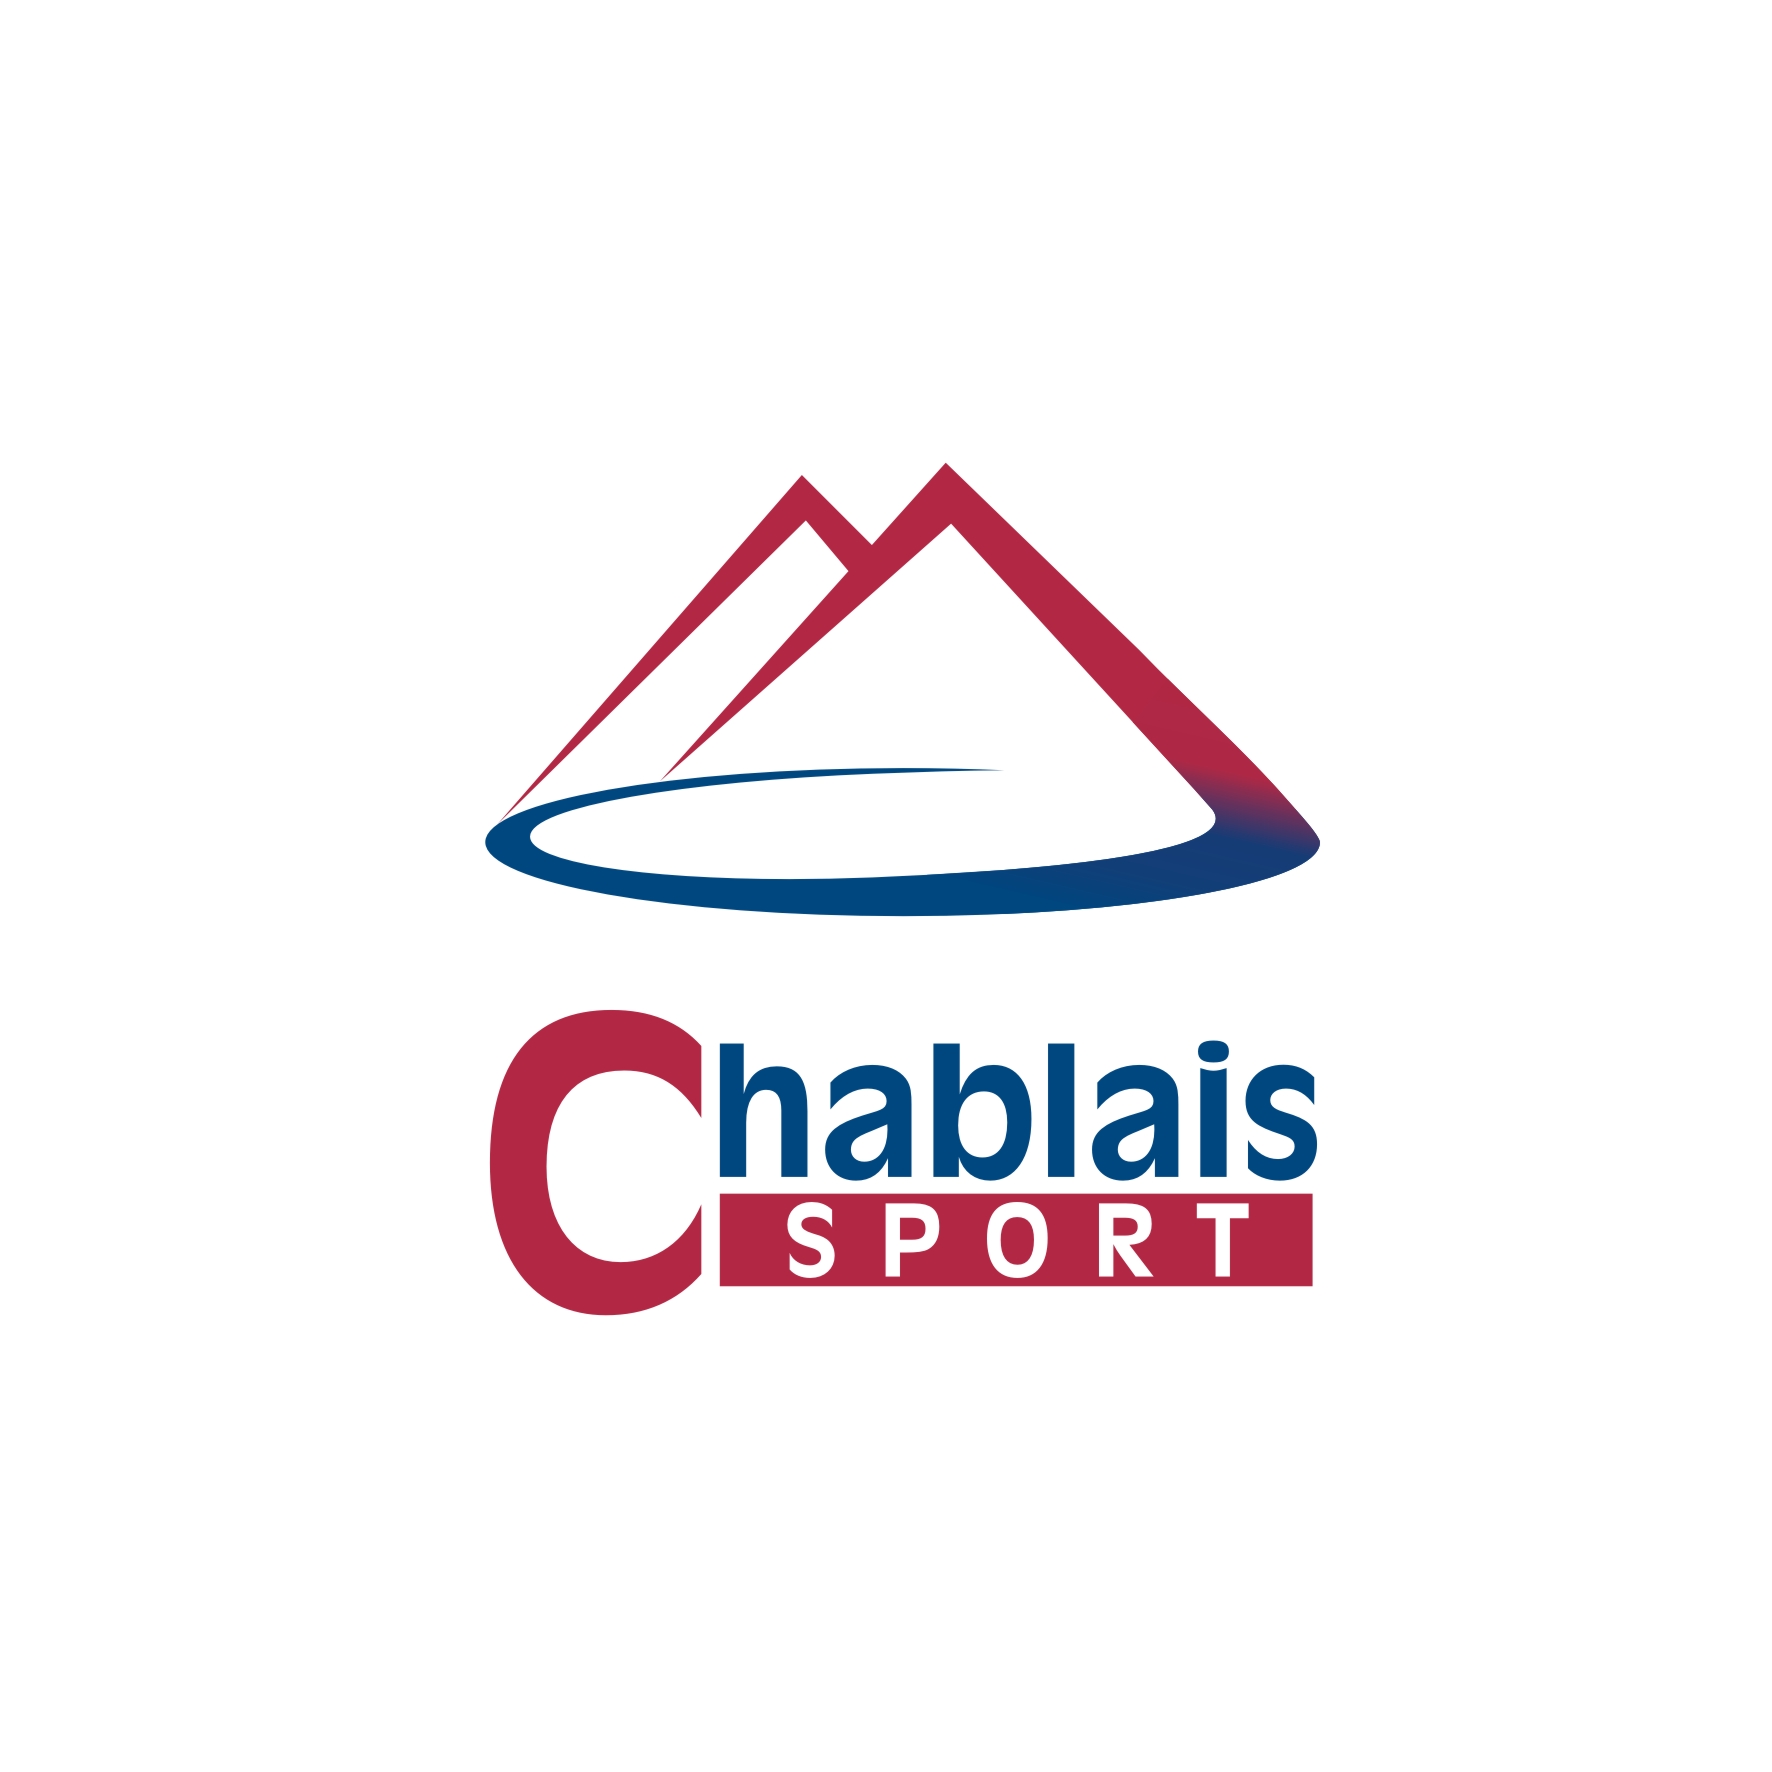 Chablais Sport